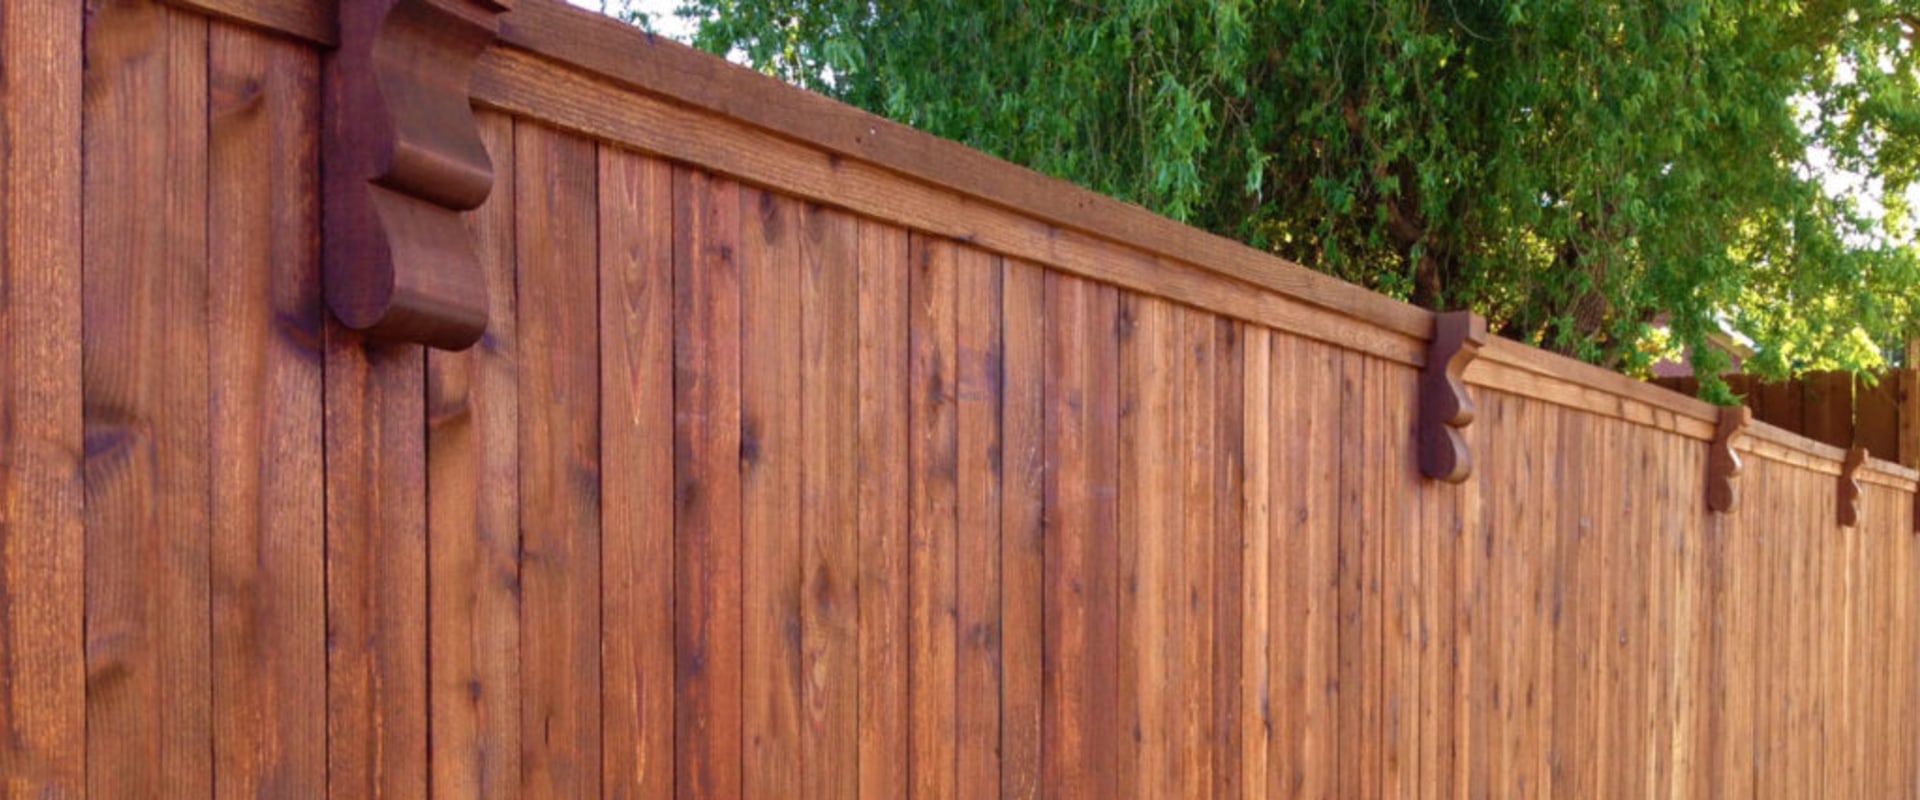 Cedar Wood Fence Materials